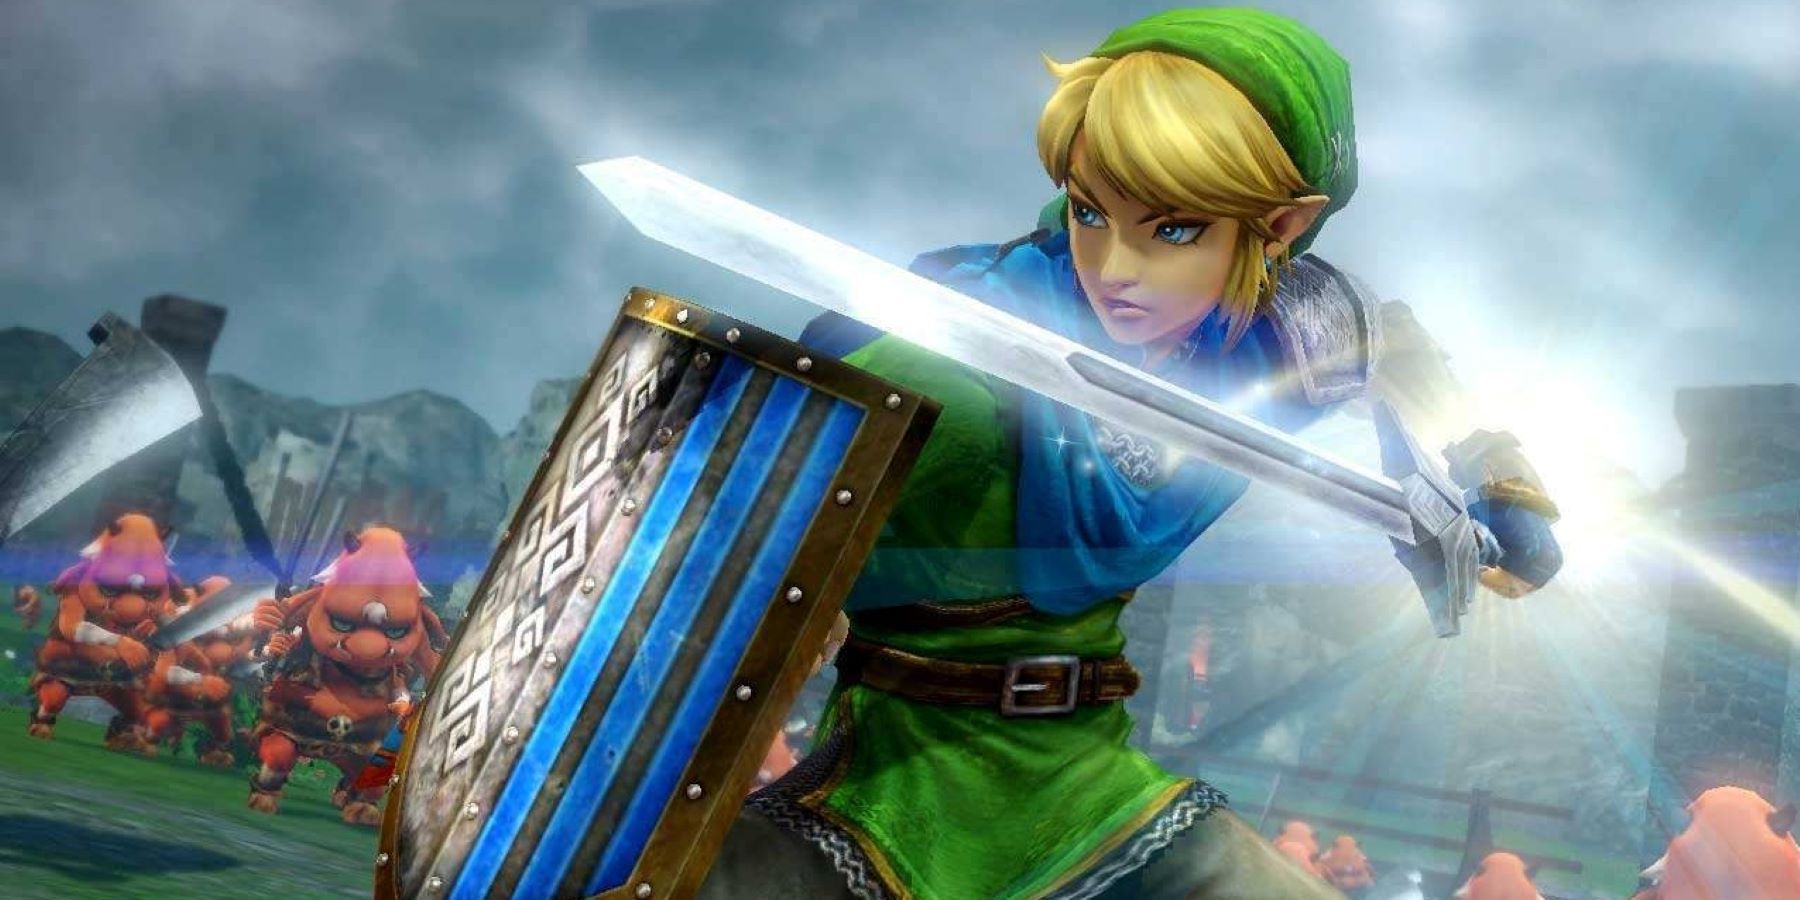 Link prepares an attack against multiple Bokoblins in Hyrule Warriors